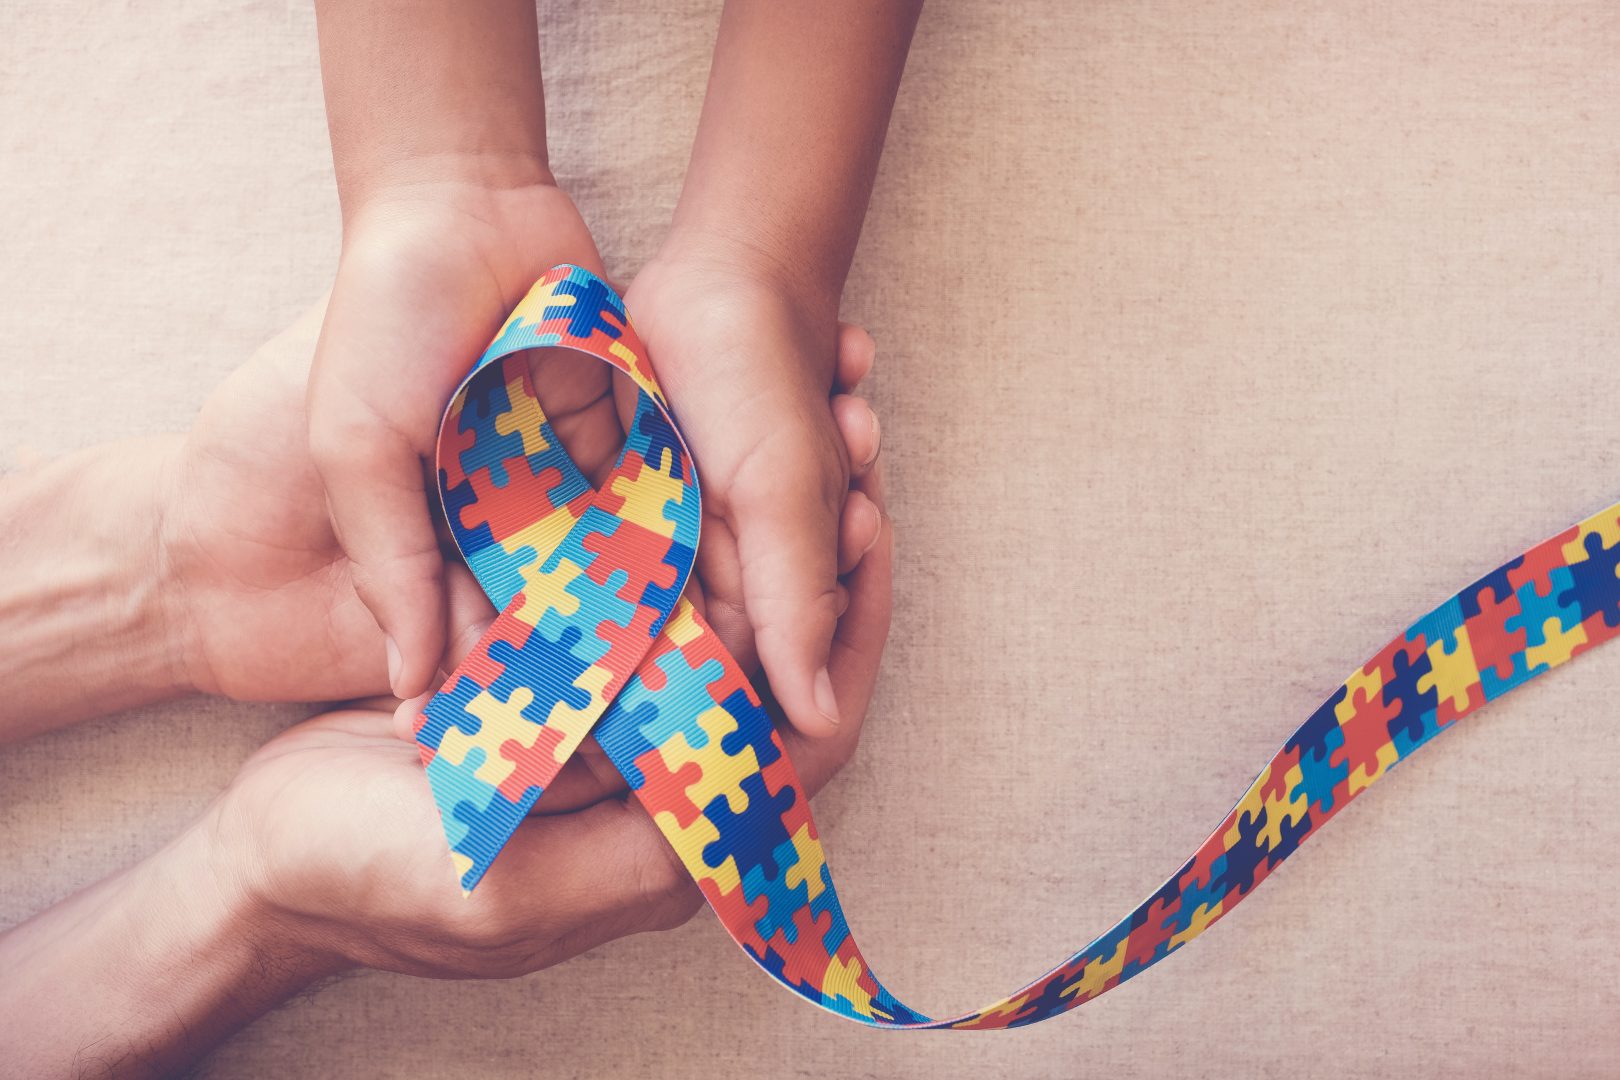 Can Birth Trauma Cause Autism?